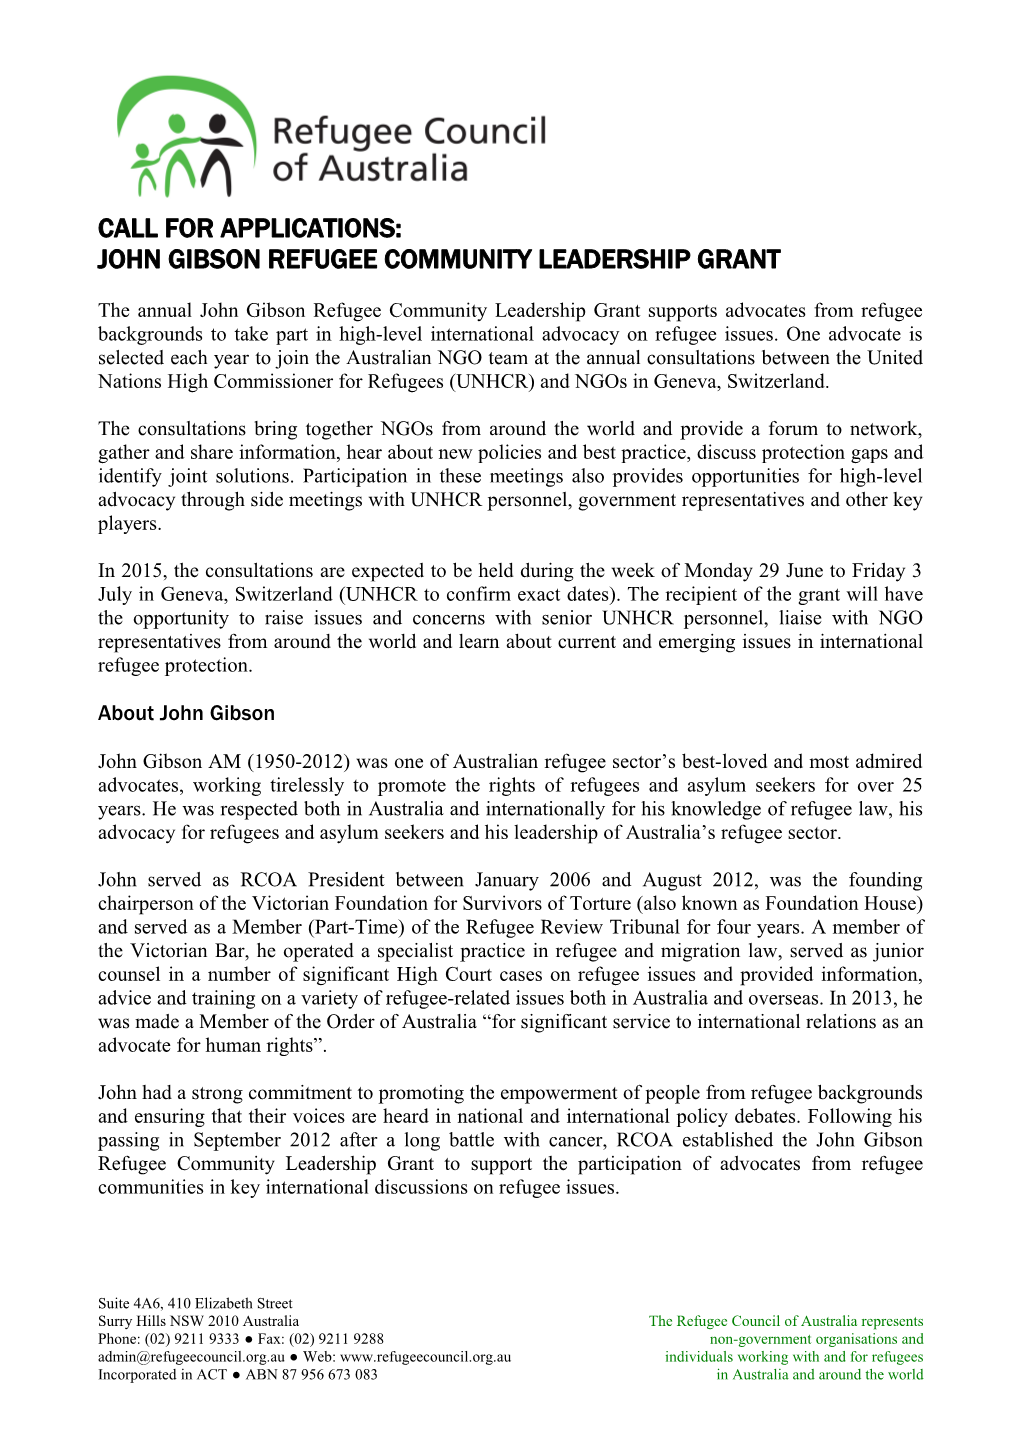 Call Forapplications: John Gibson Refugee Community Leadership Grant